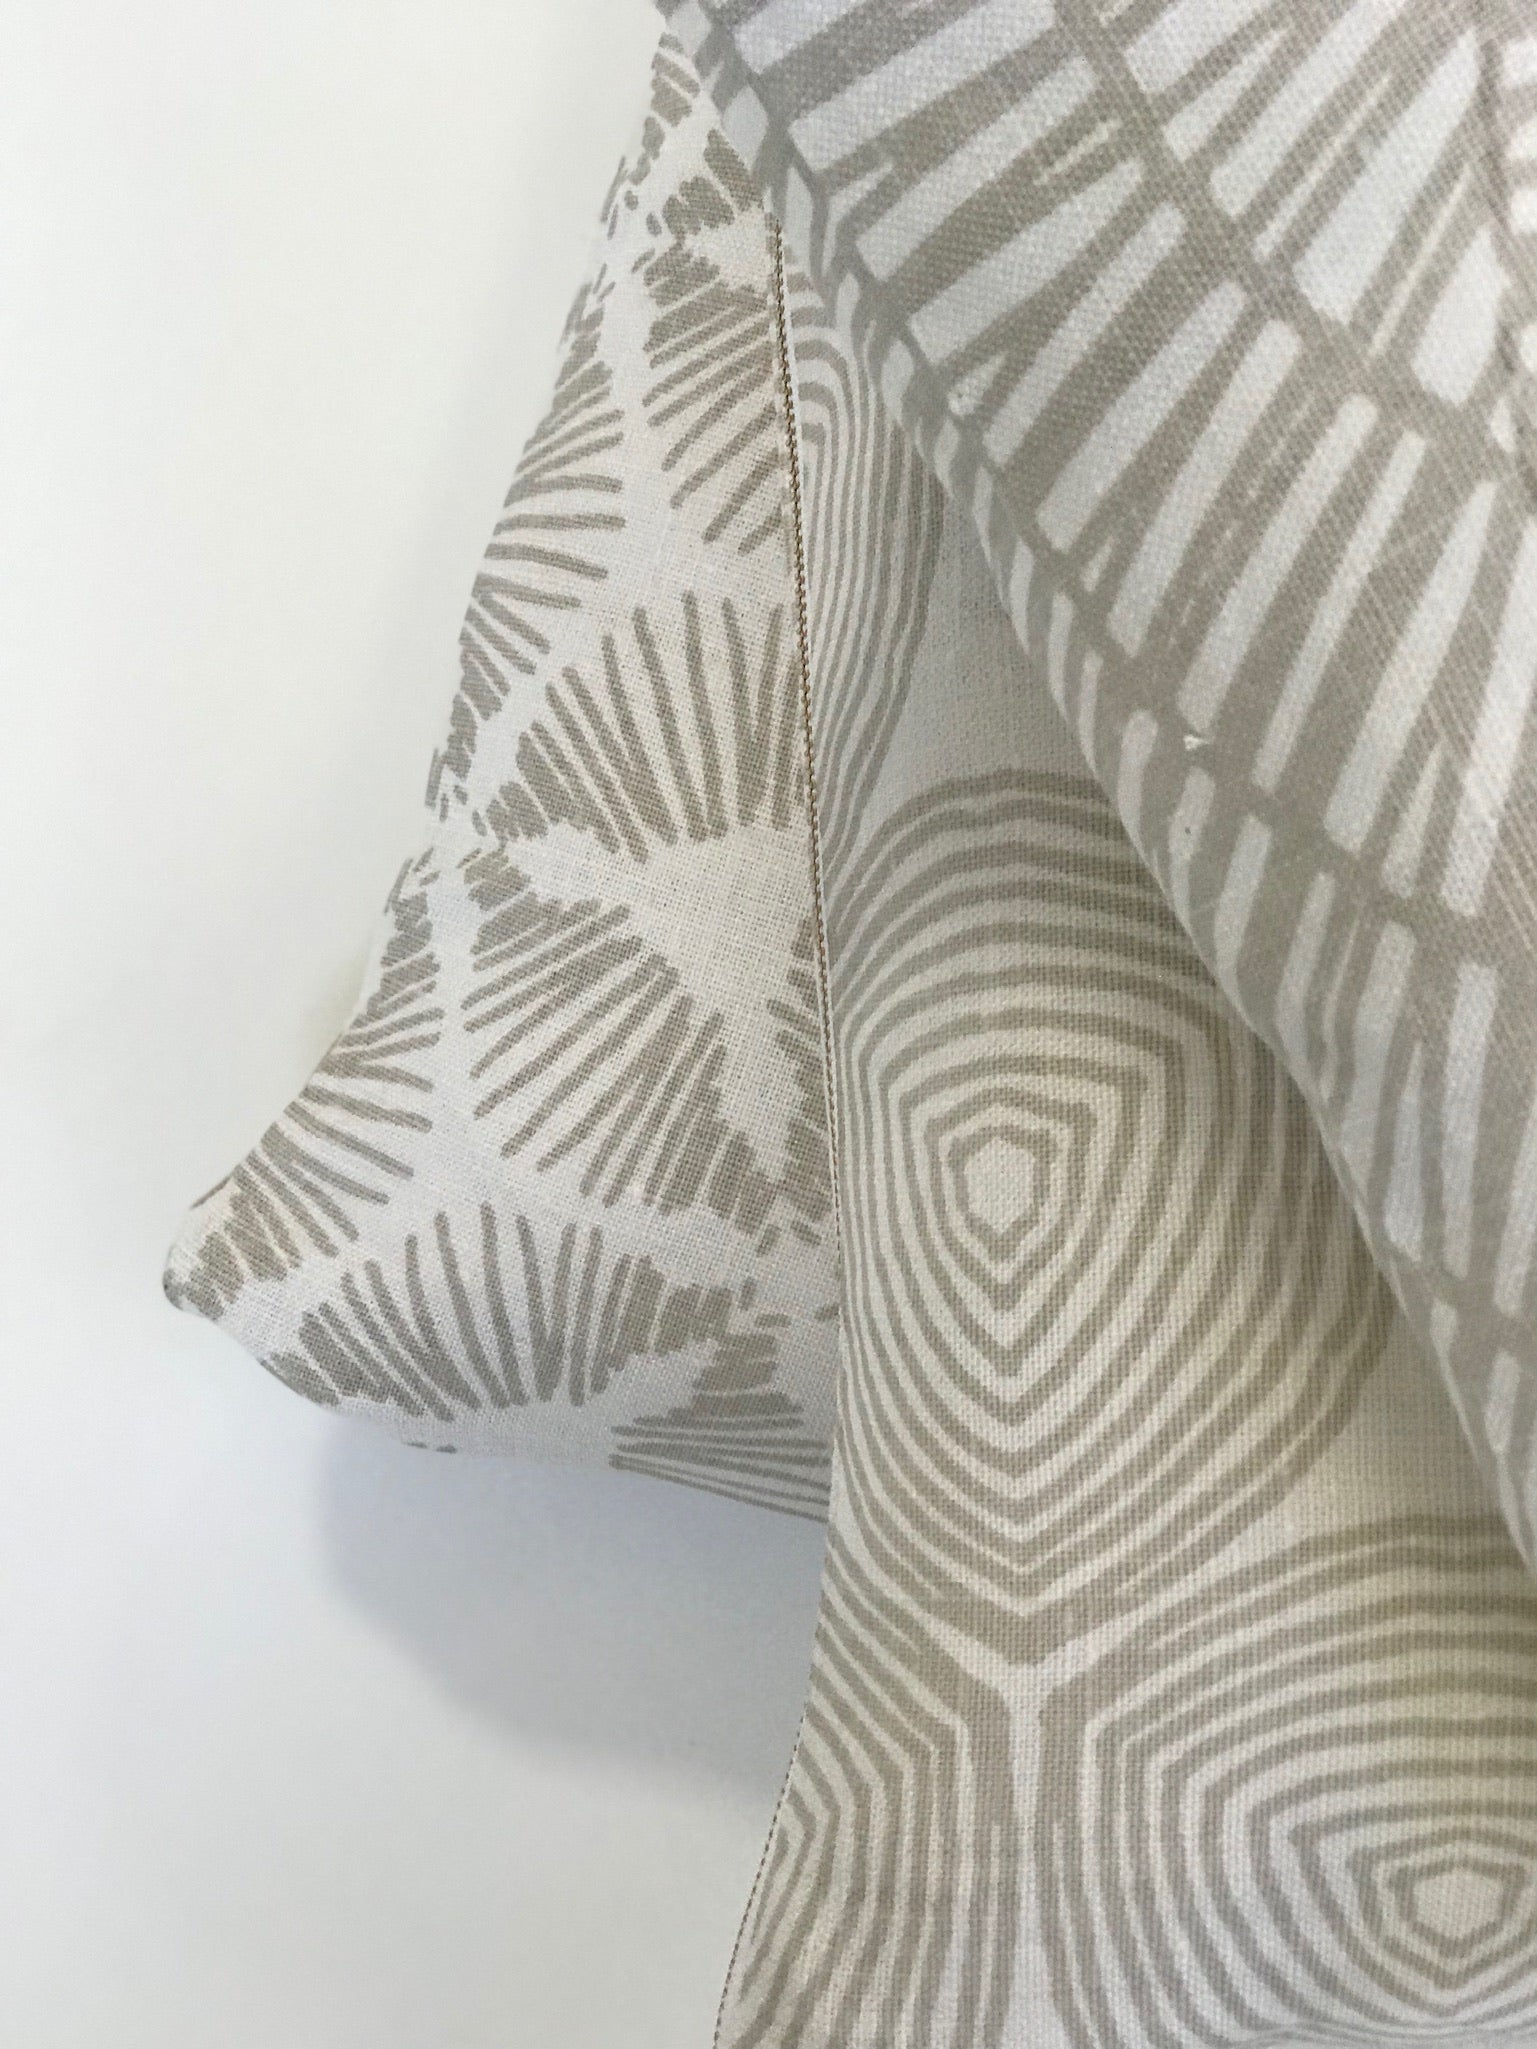 greige textiles fan  heron on oyster pillow 22" handprinted linen fabric